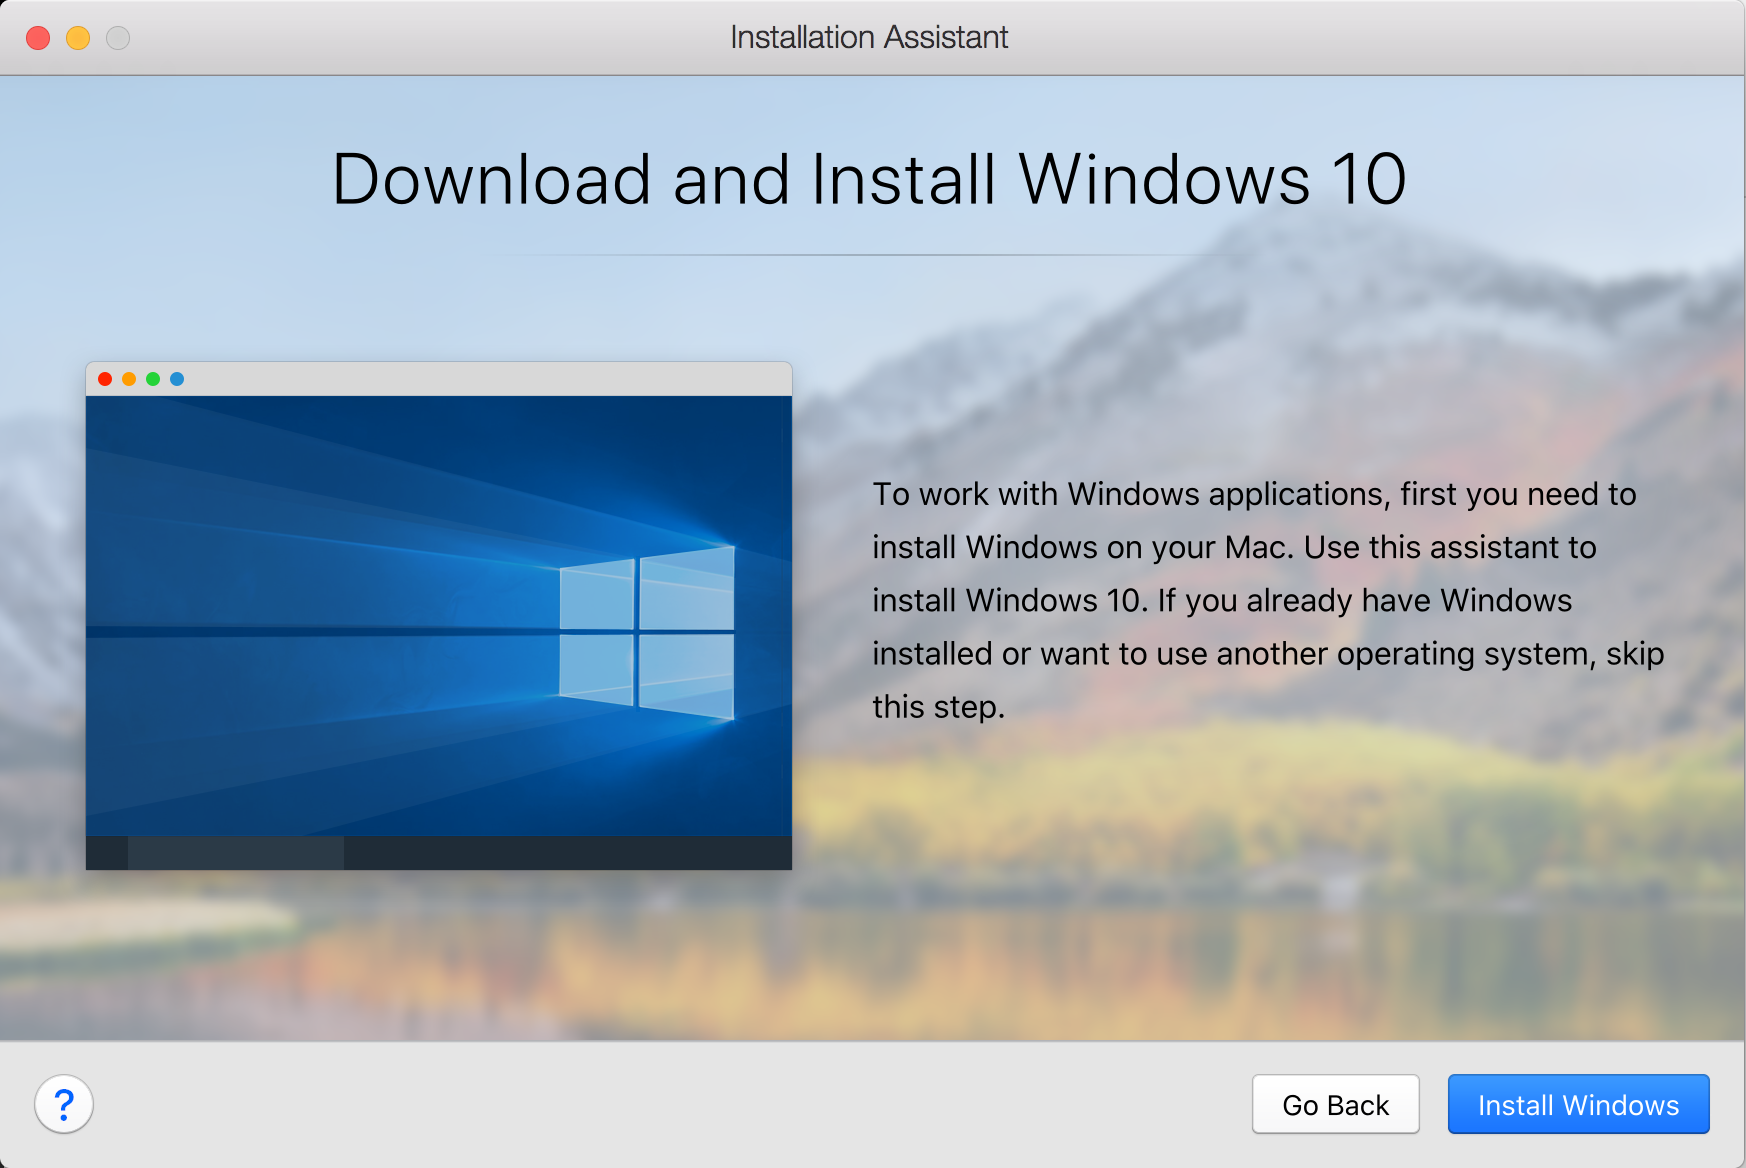 download parallels windows 10